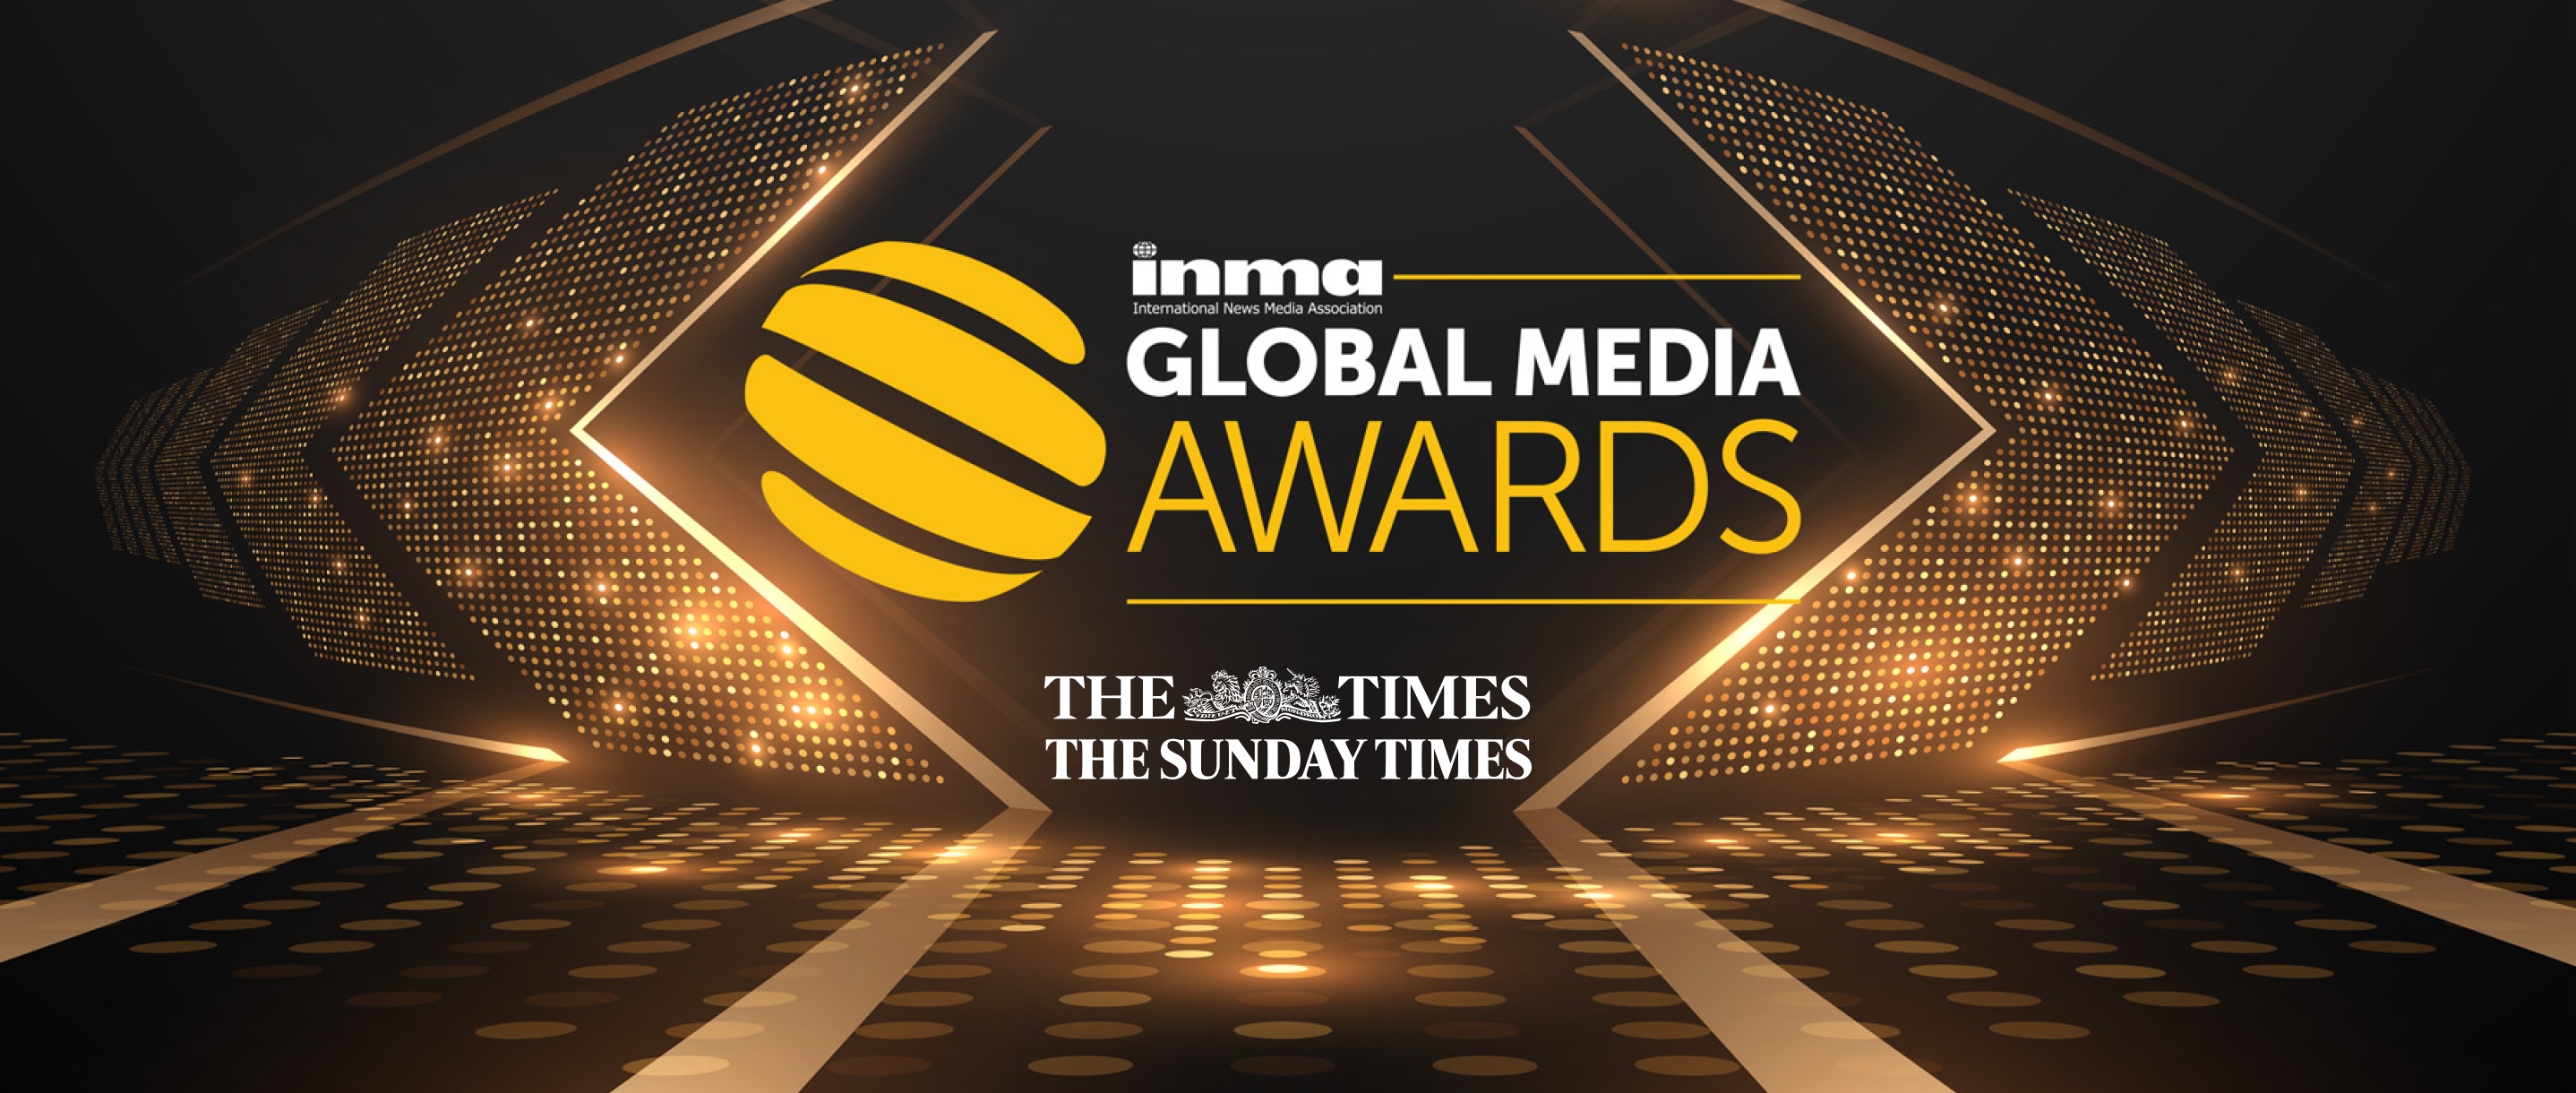 Celebrating innovation: The Times nominated for newsroom development award